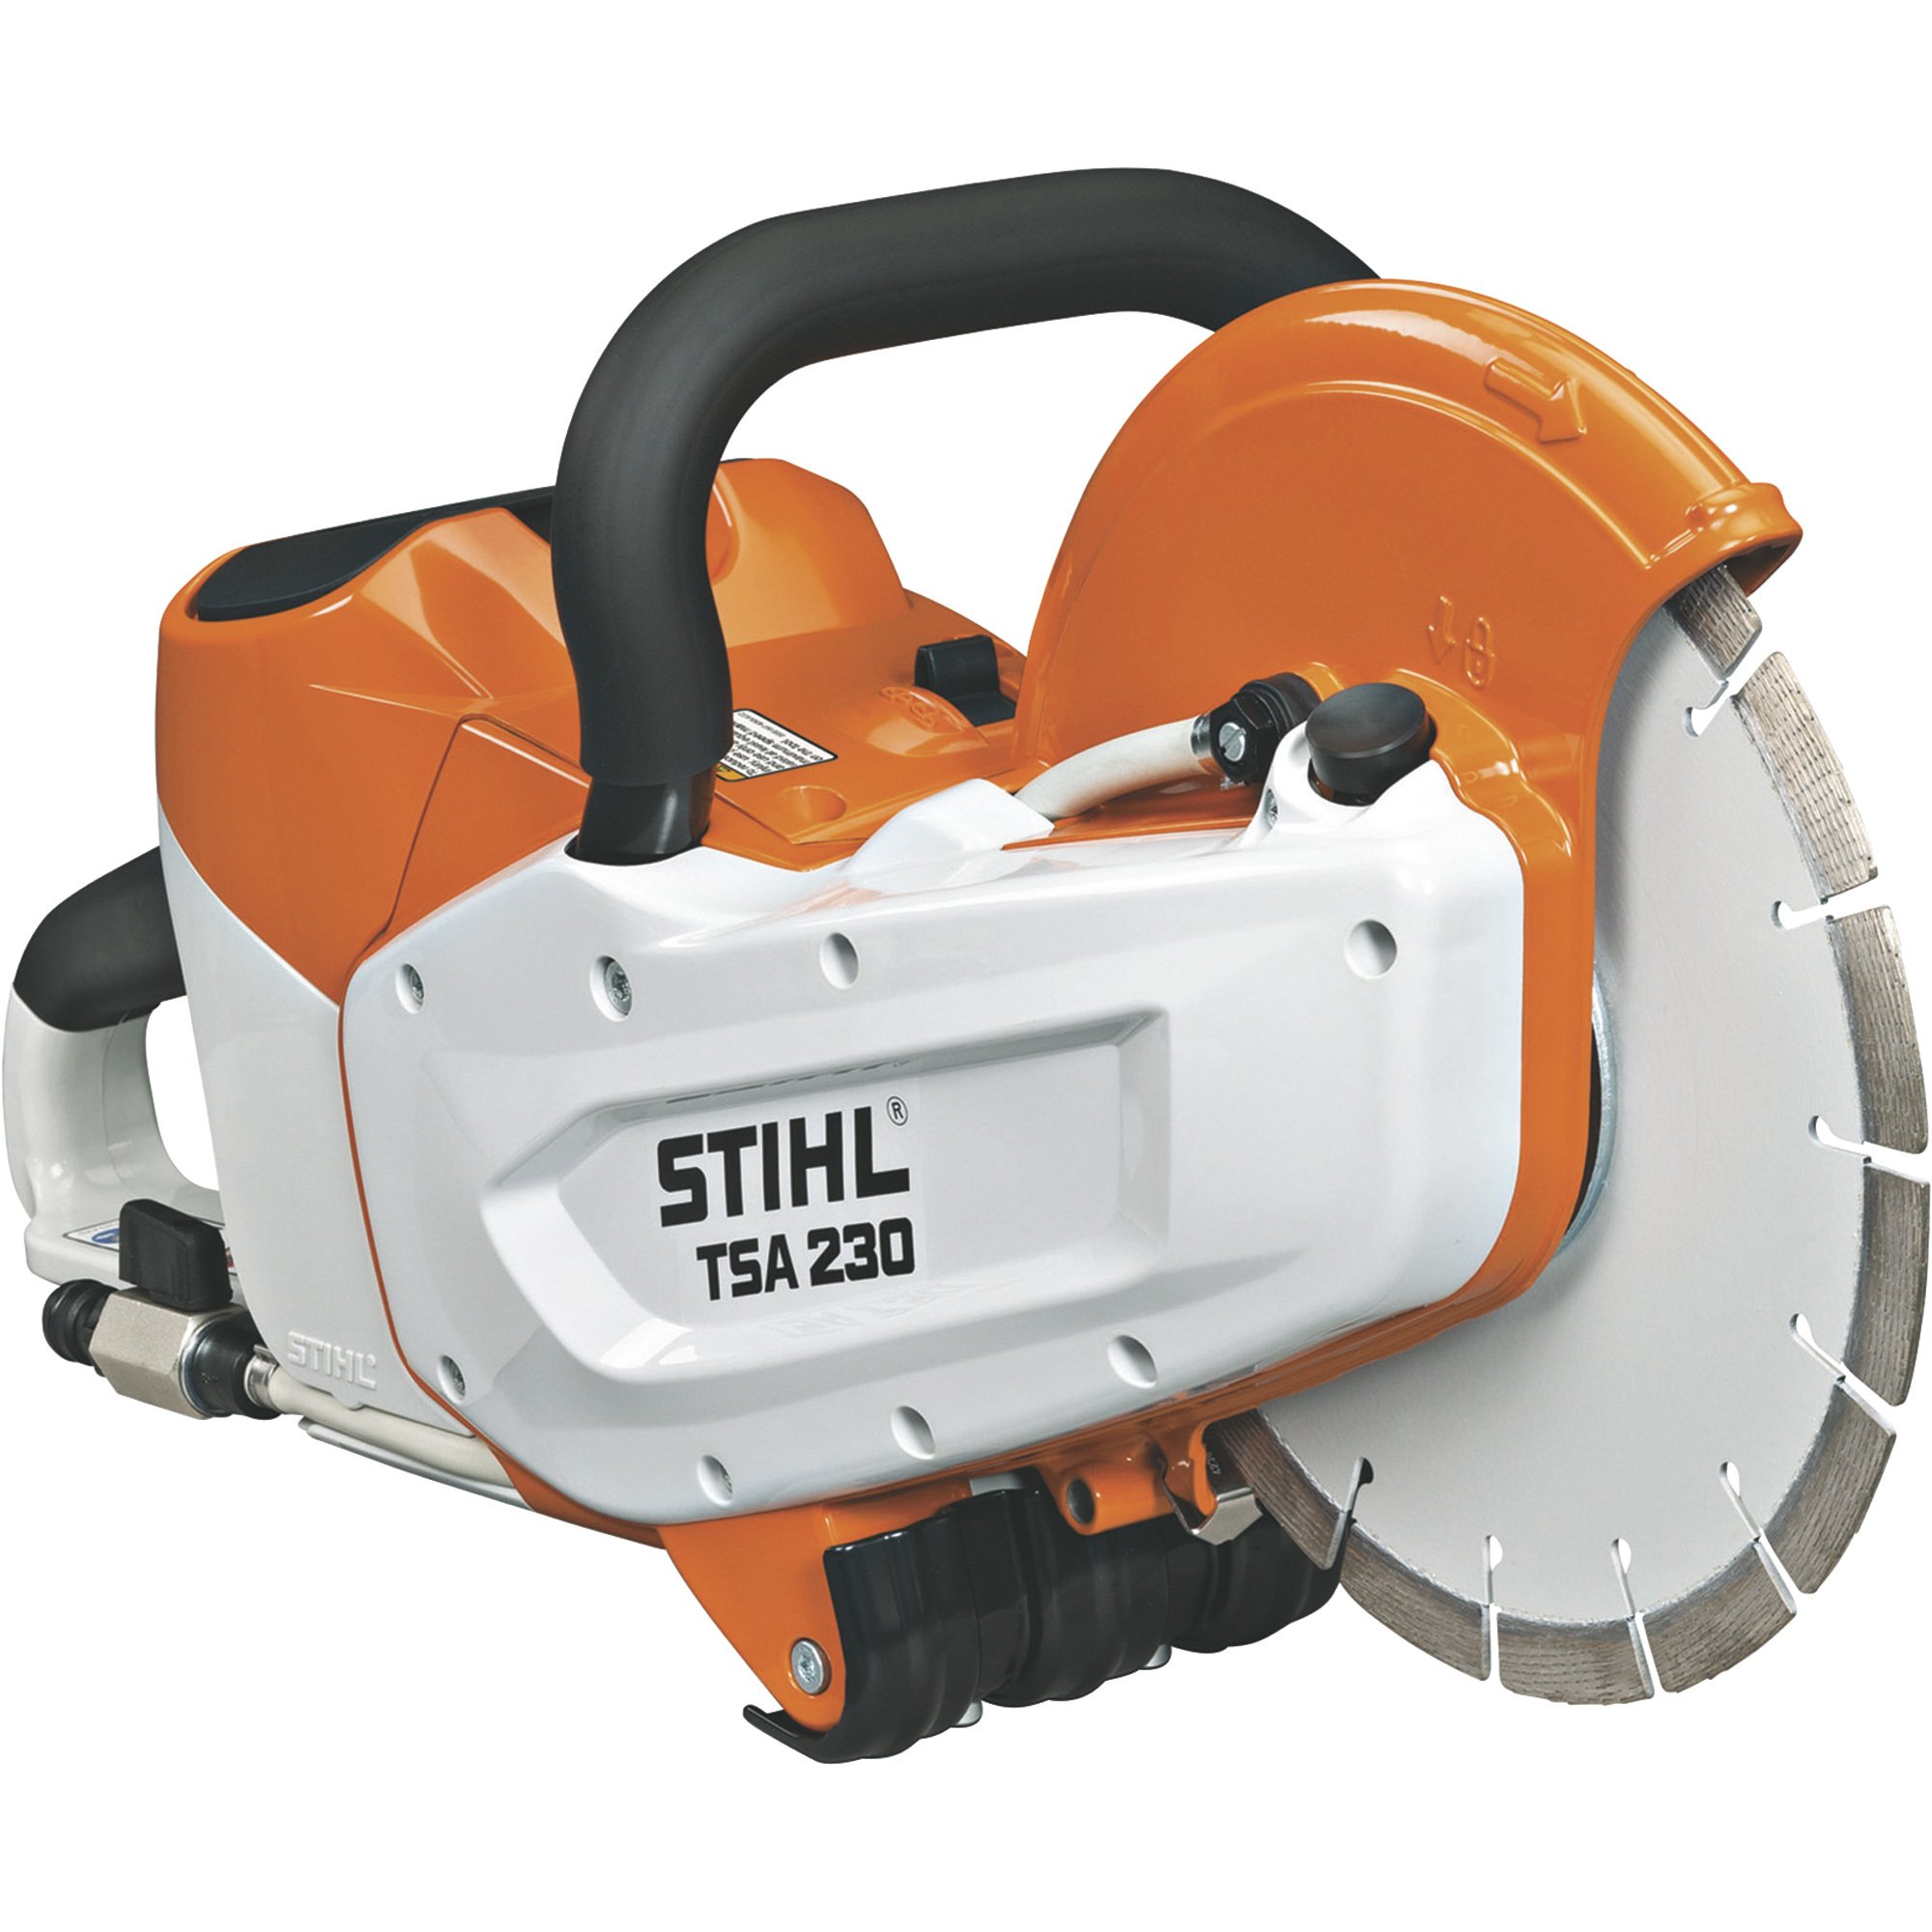 STIHL Launches Battery-powered TSA 300 Cutquik Saw From: Stihl Inc